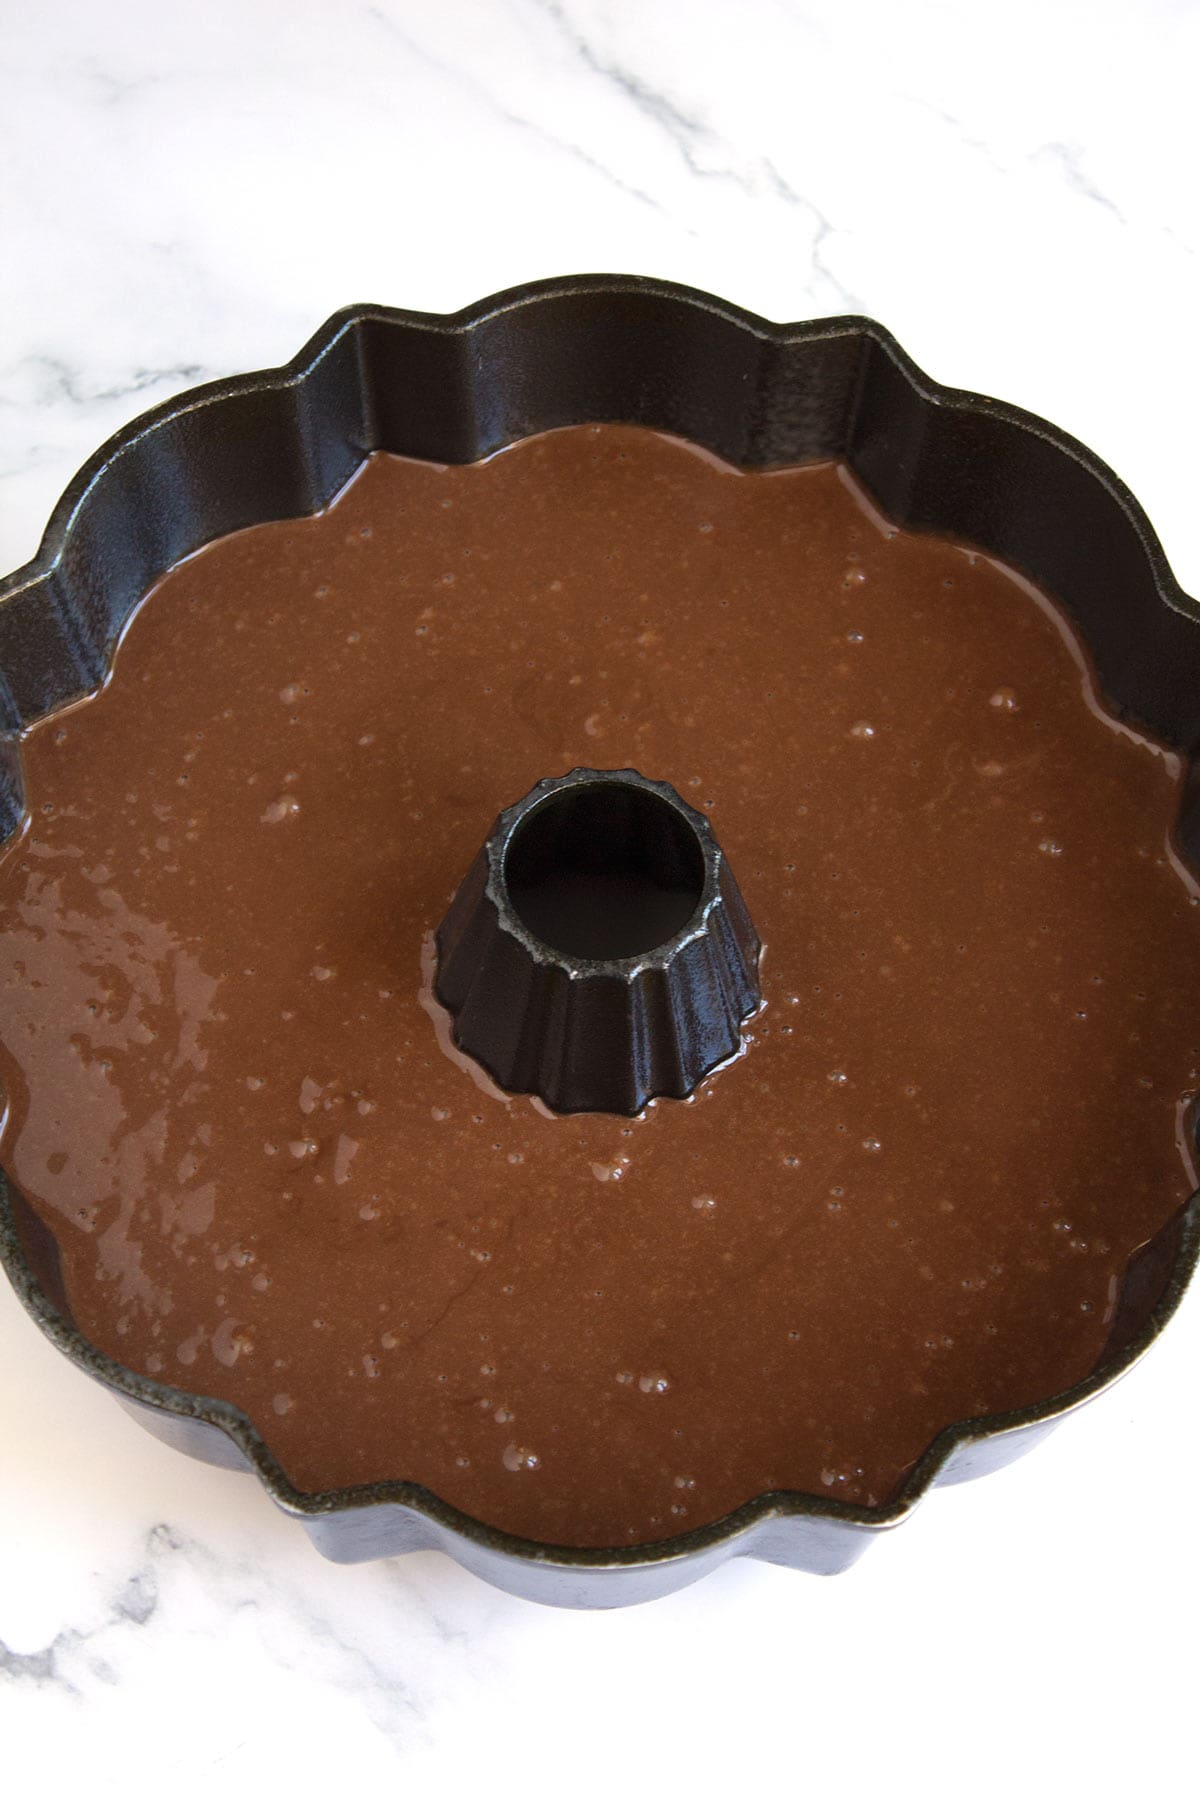 Chocolate Bundt cake batter in a prepared Bundt pan.